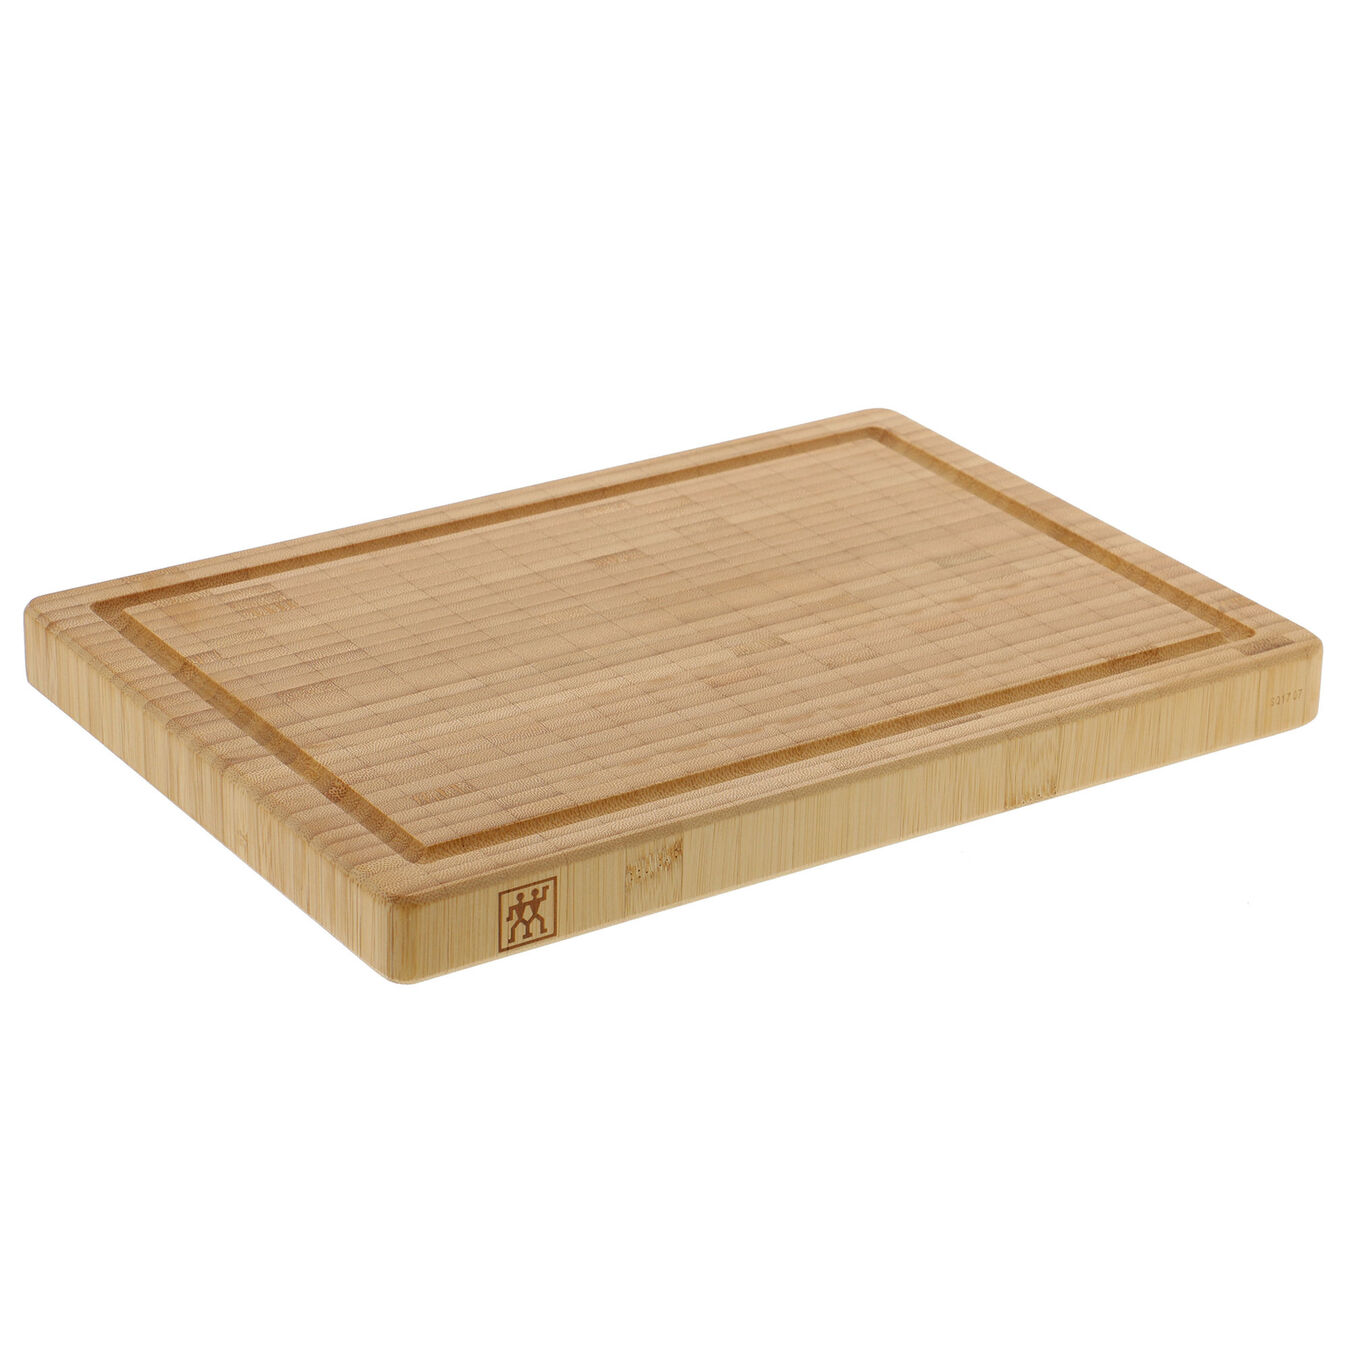 36 cm x 25 cm Bamboo Chopping board,,large 2